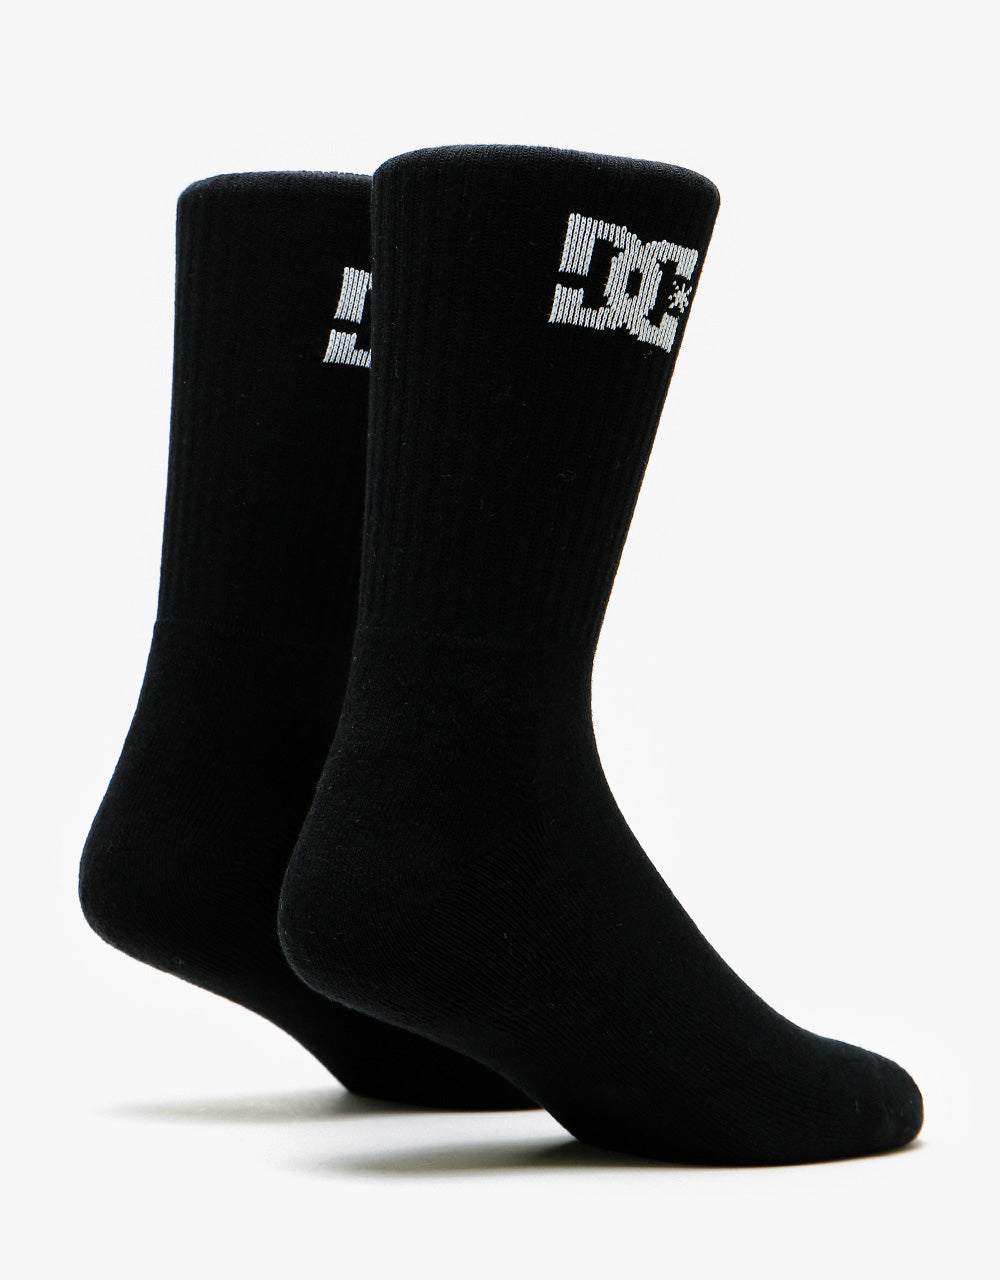 DC Crew 3 Pack Socks - Black